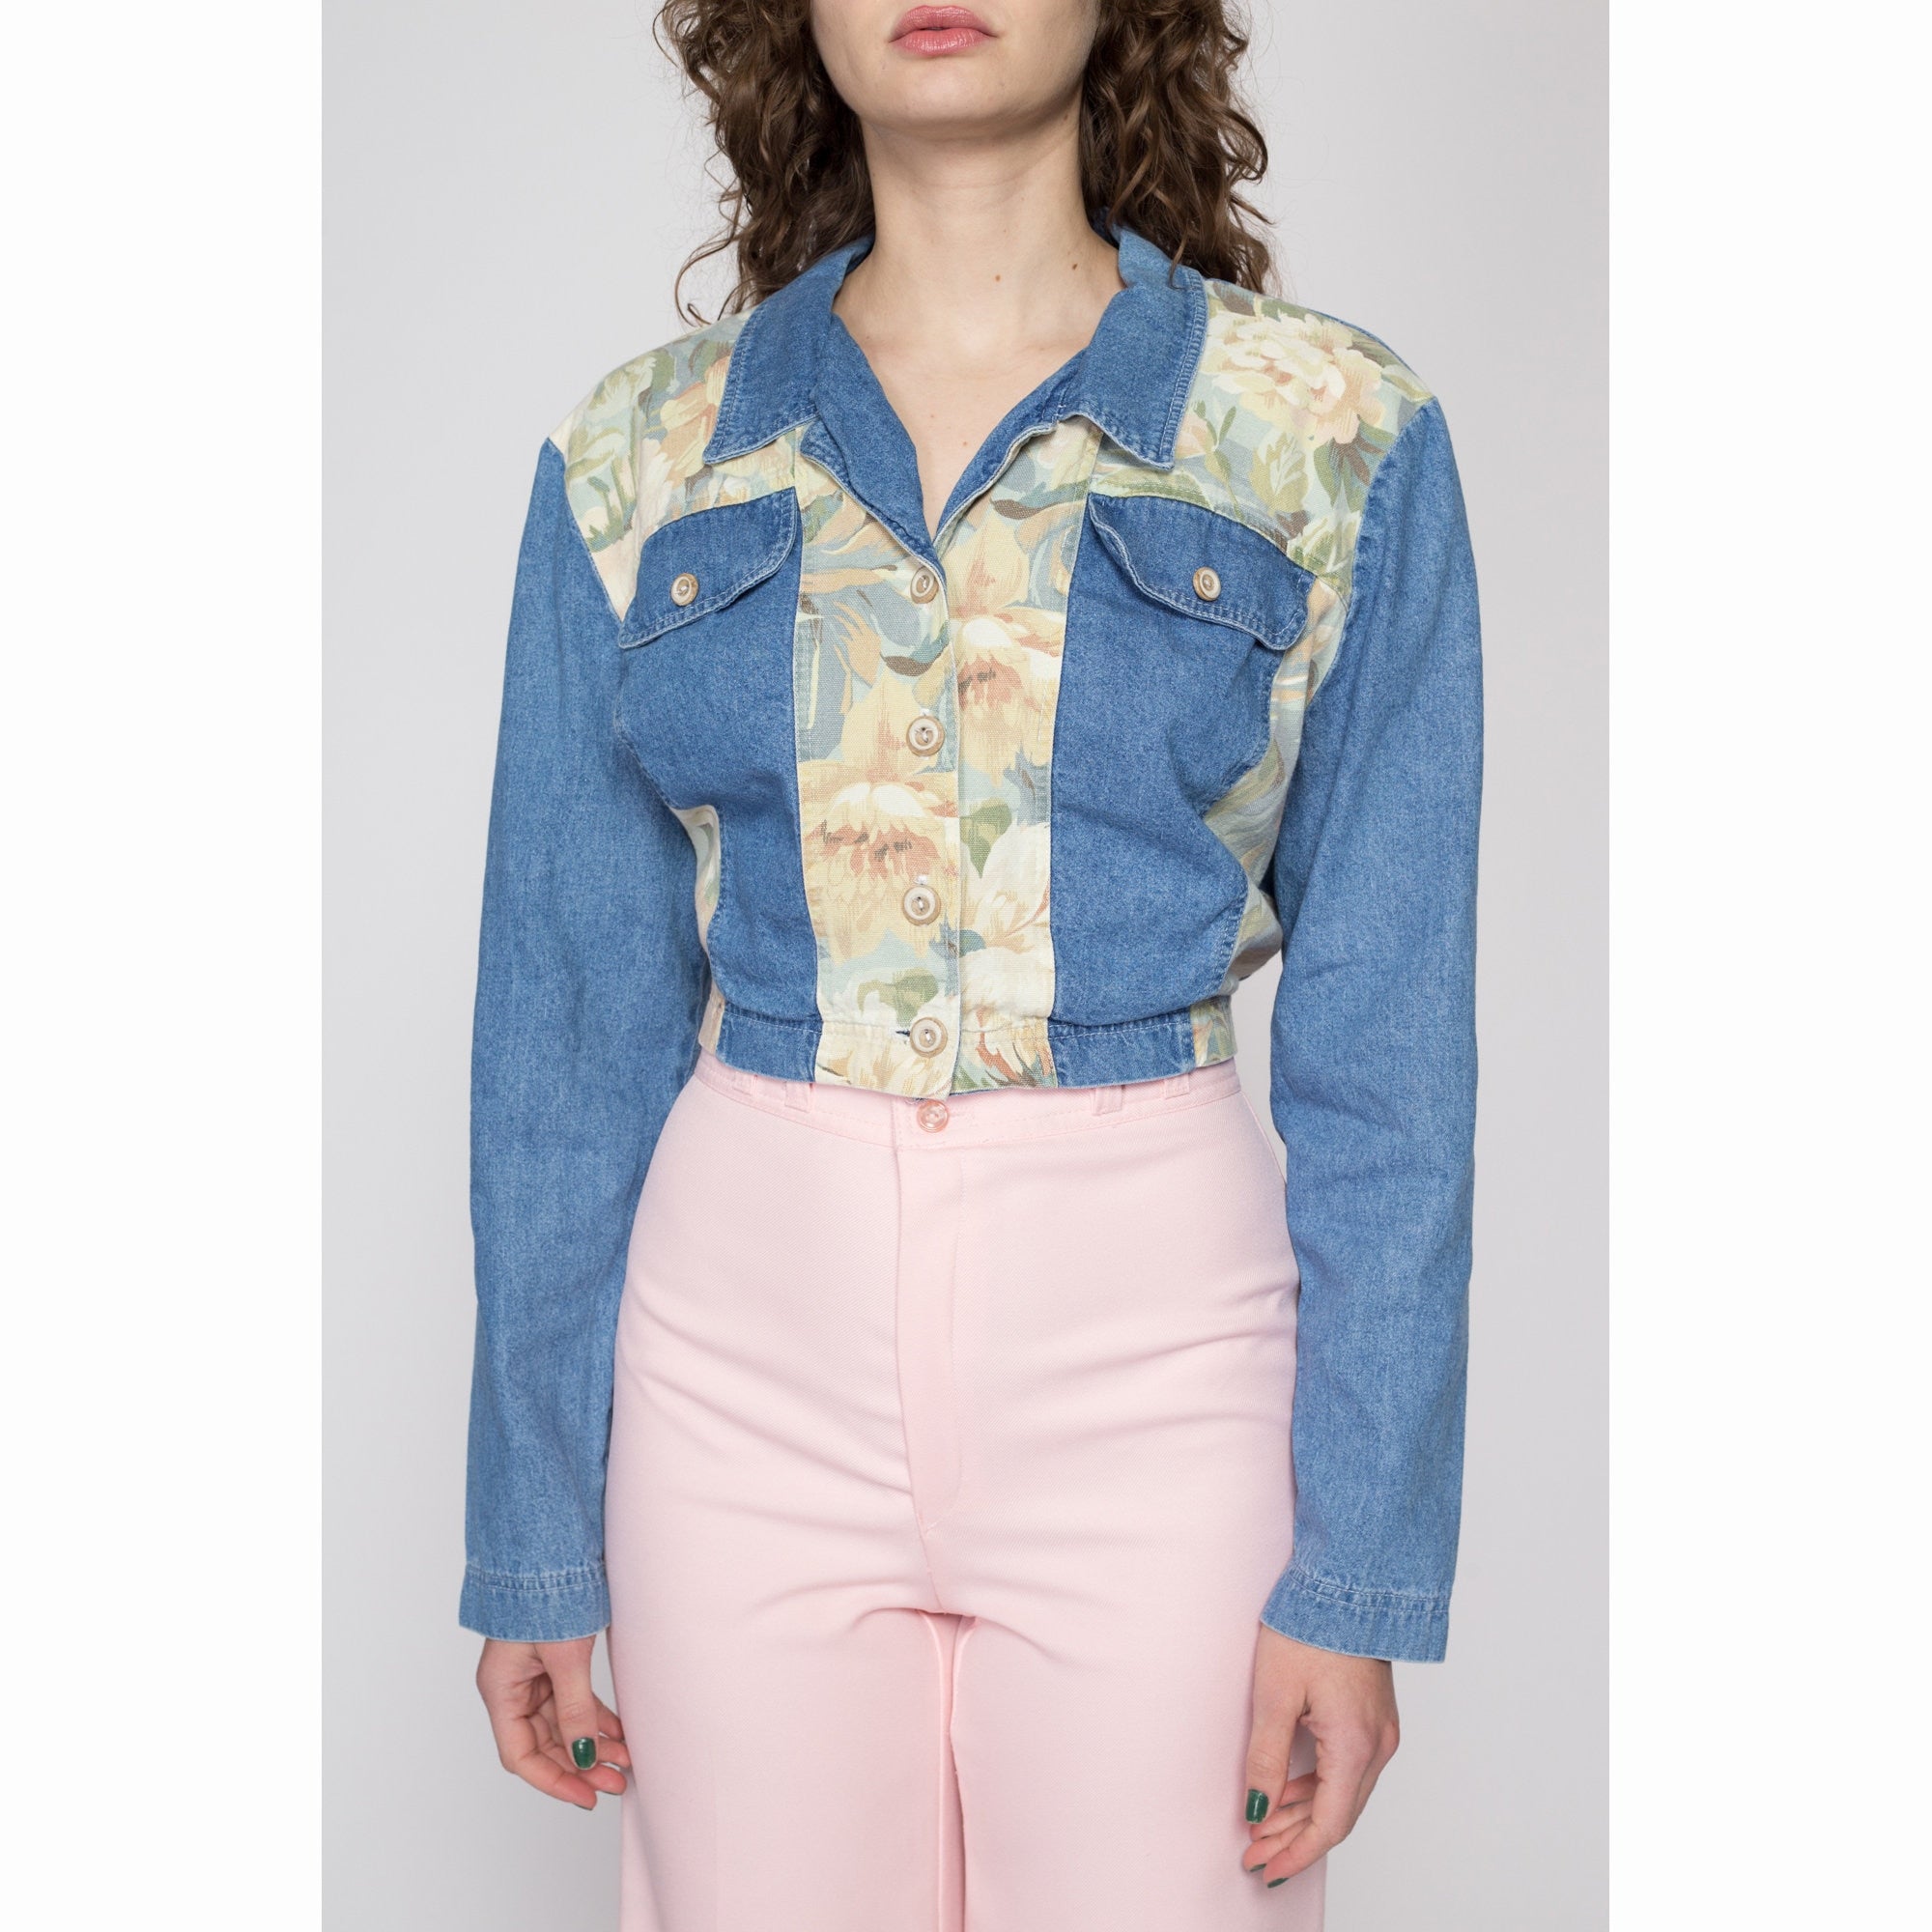 SHEIN SXY Collared Ripped Super Crop Denim Jacket With Camisole | Denim  fashion, Cropped denim jacket outfit, Womens fashion jackets